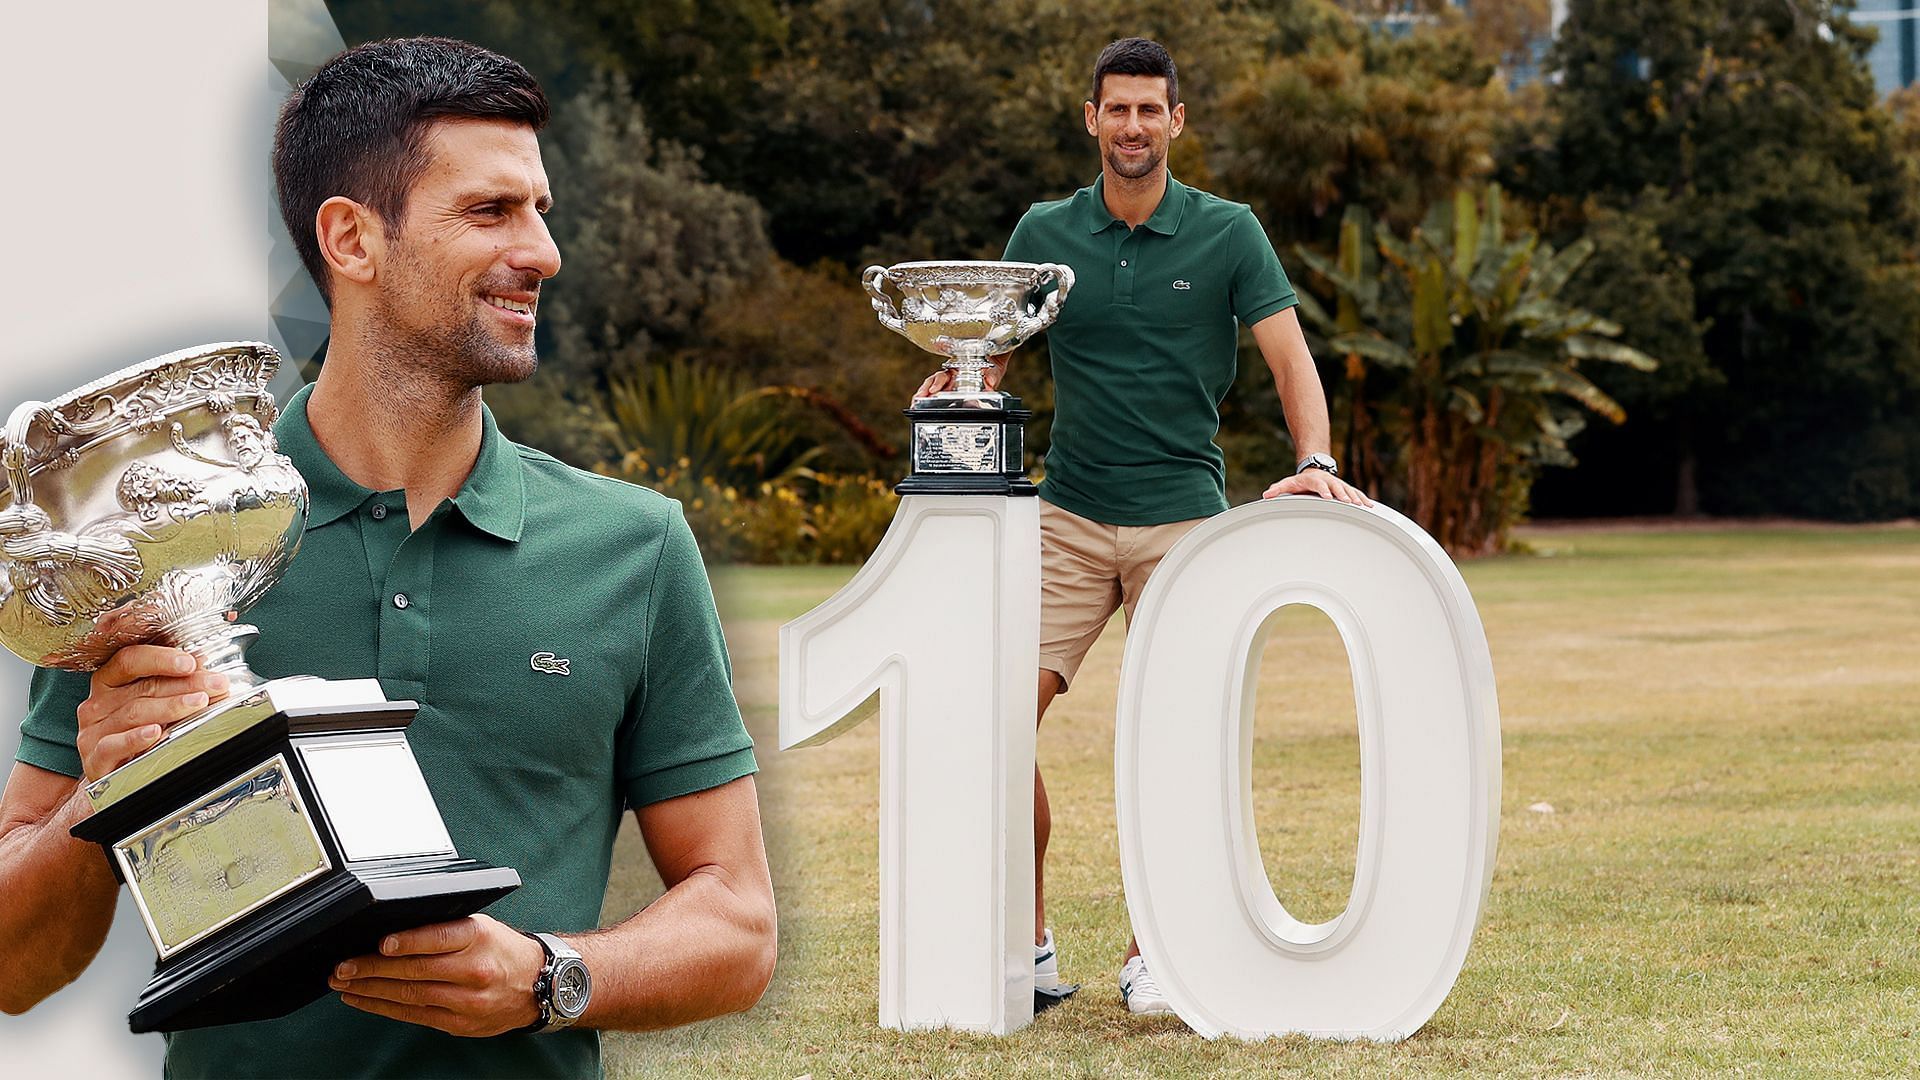 How far can Novak Djokovic go in the Slam race?